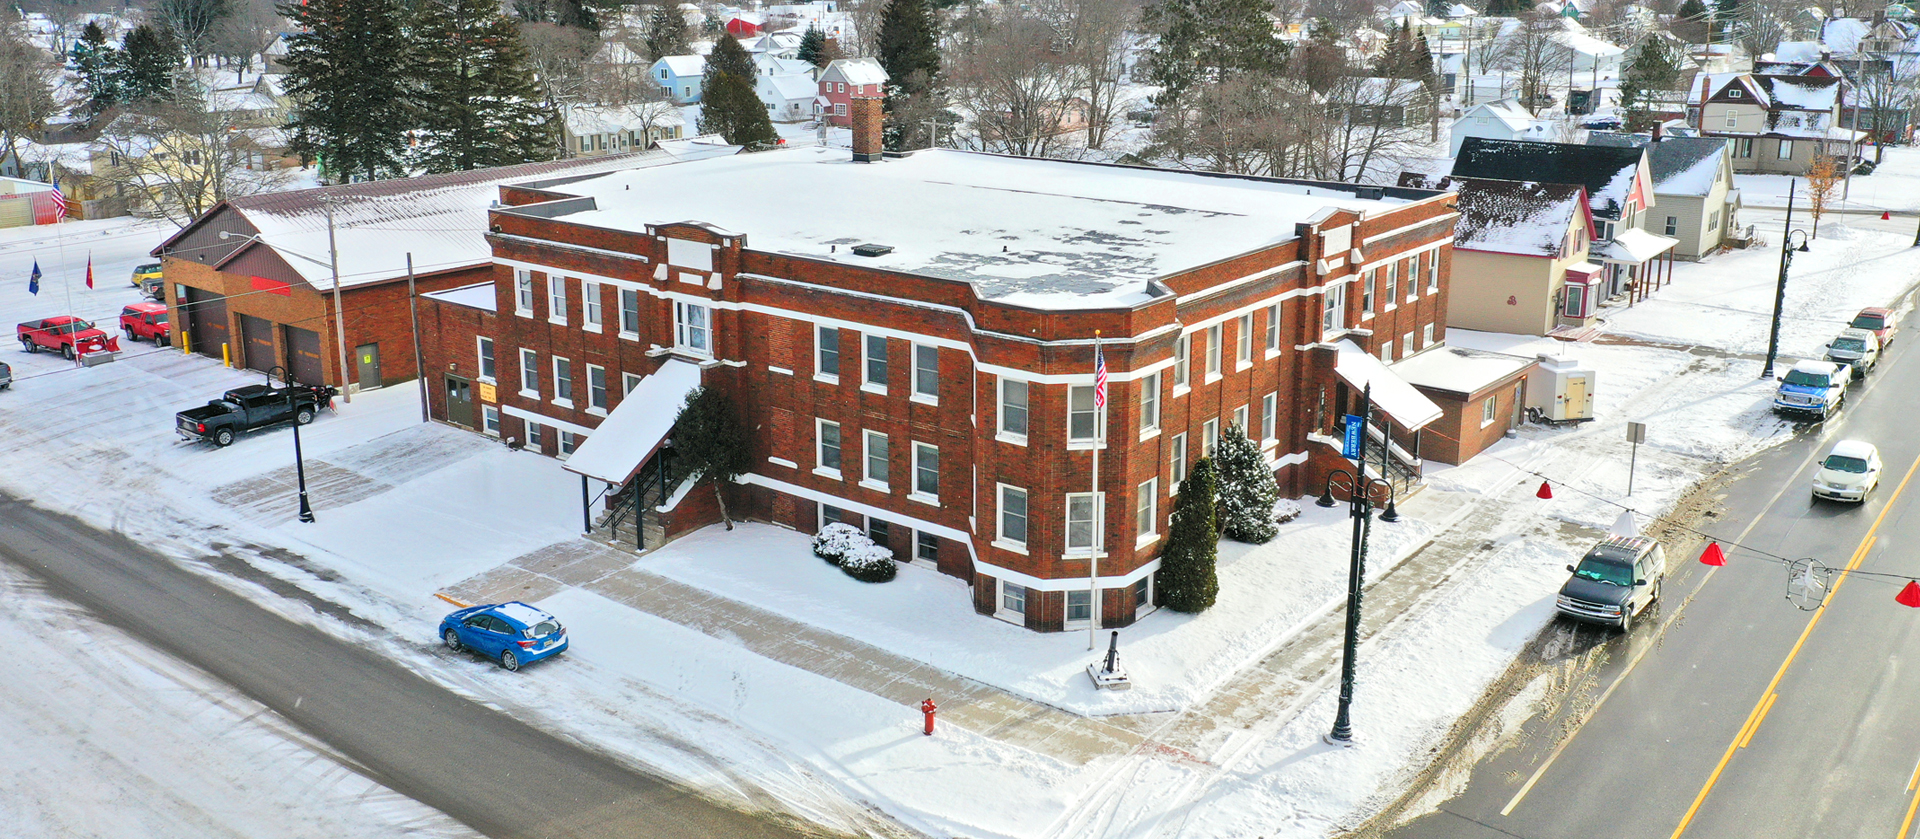 Newberry Community Building, McMillan Township Hall, Michigan 